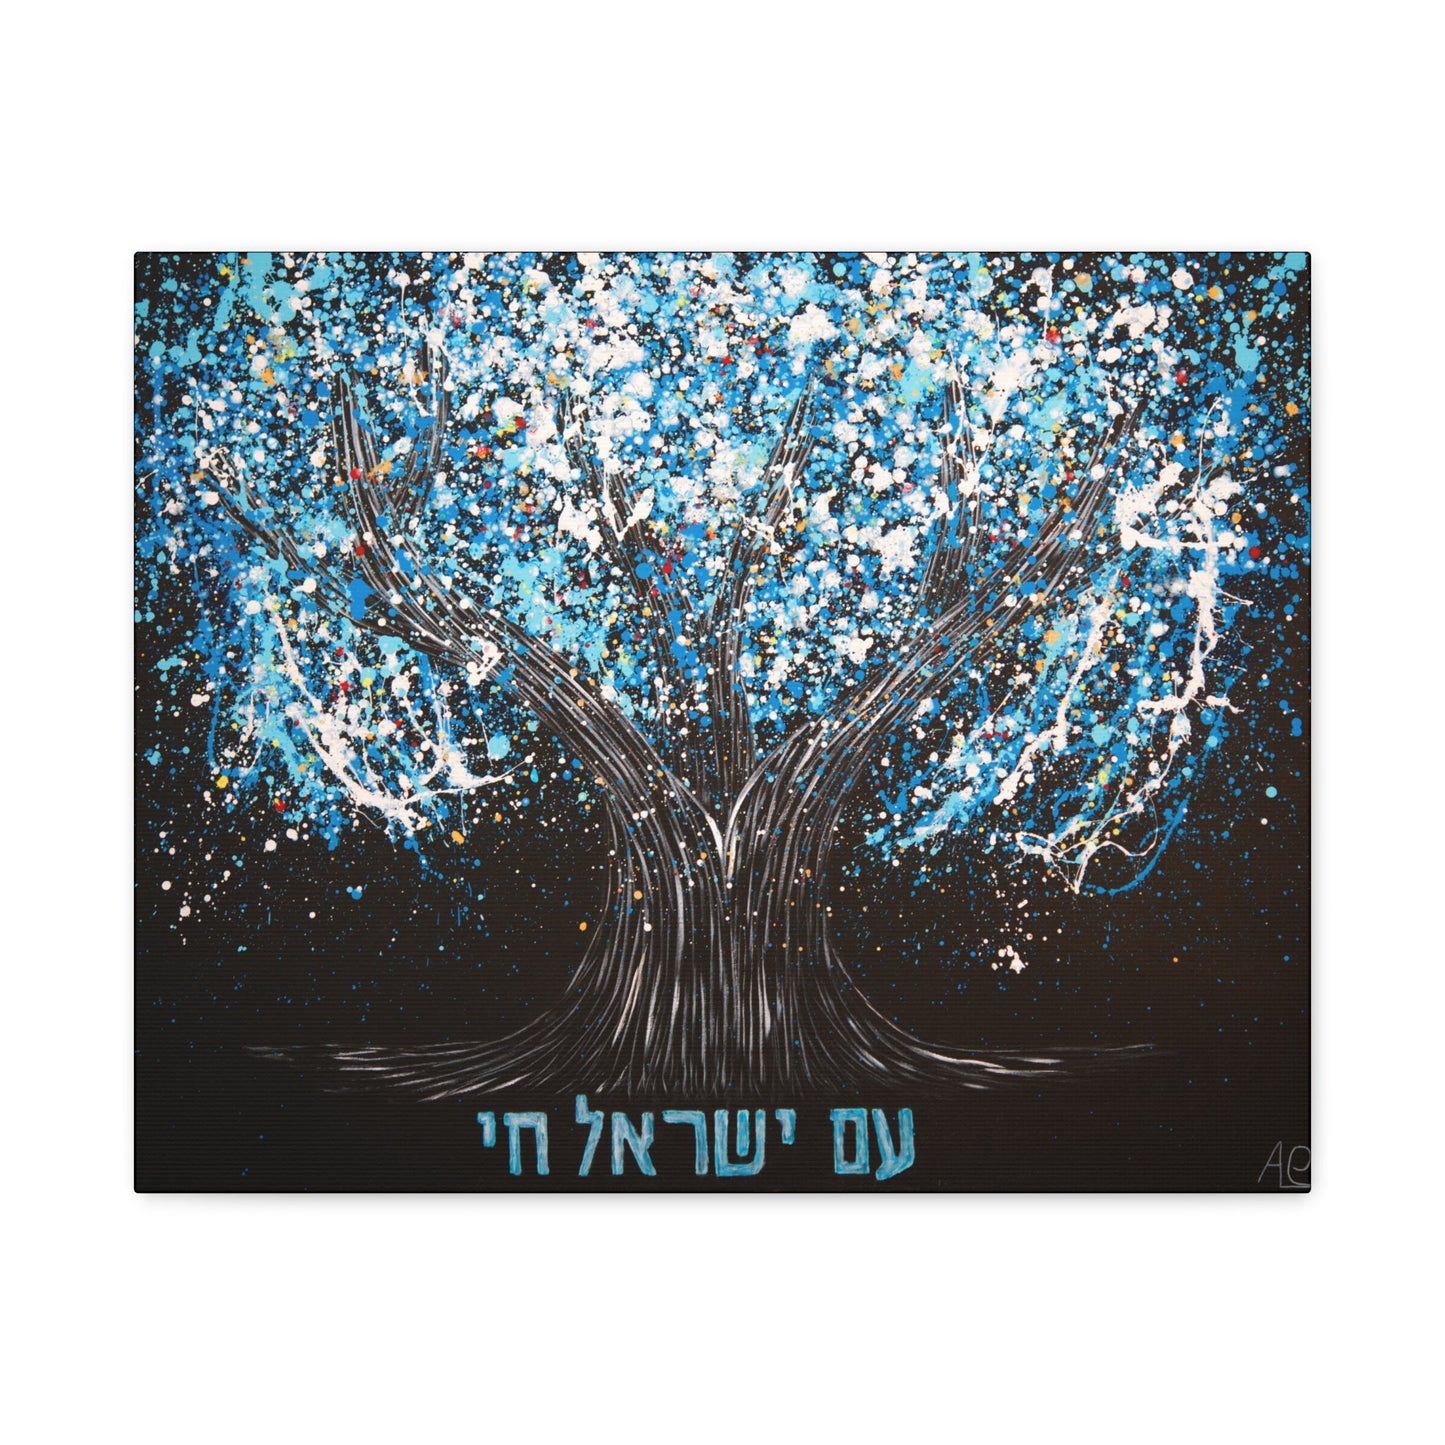 LIMITED EDITION PRINT - AM YISRAEL CHAI